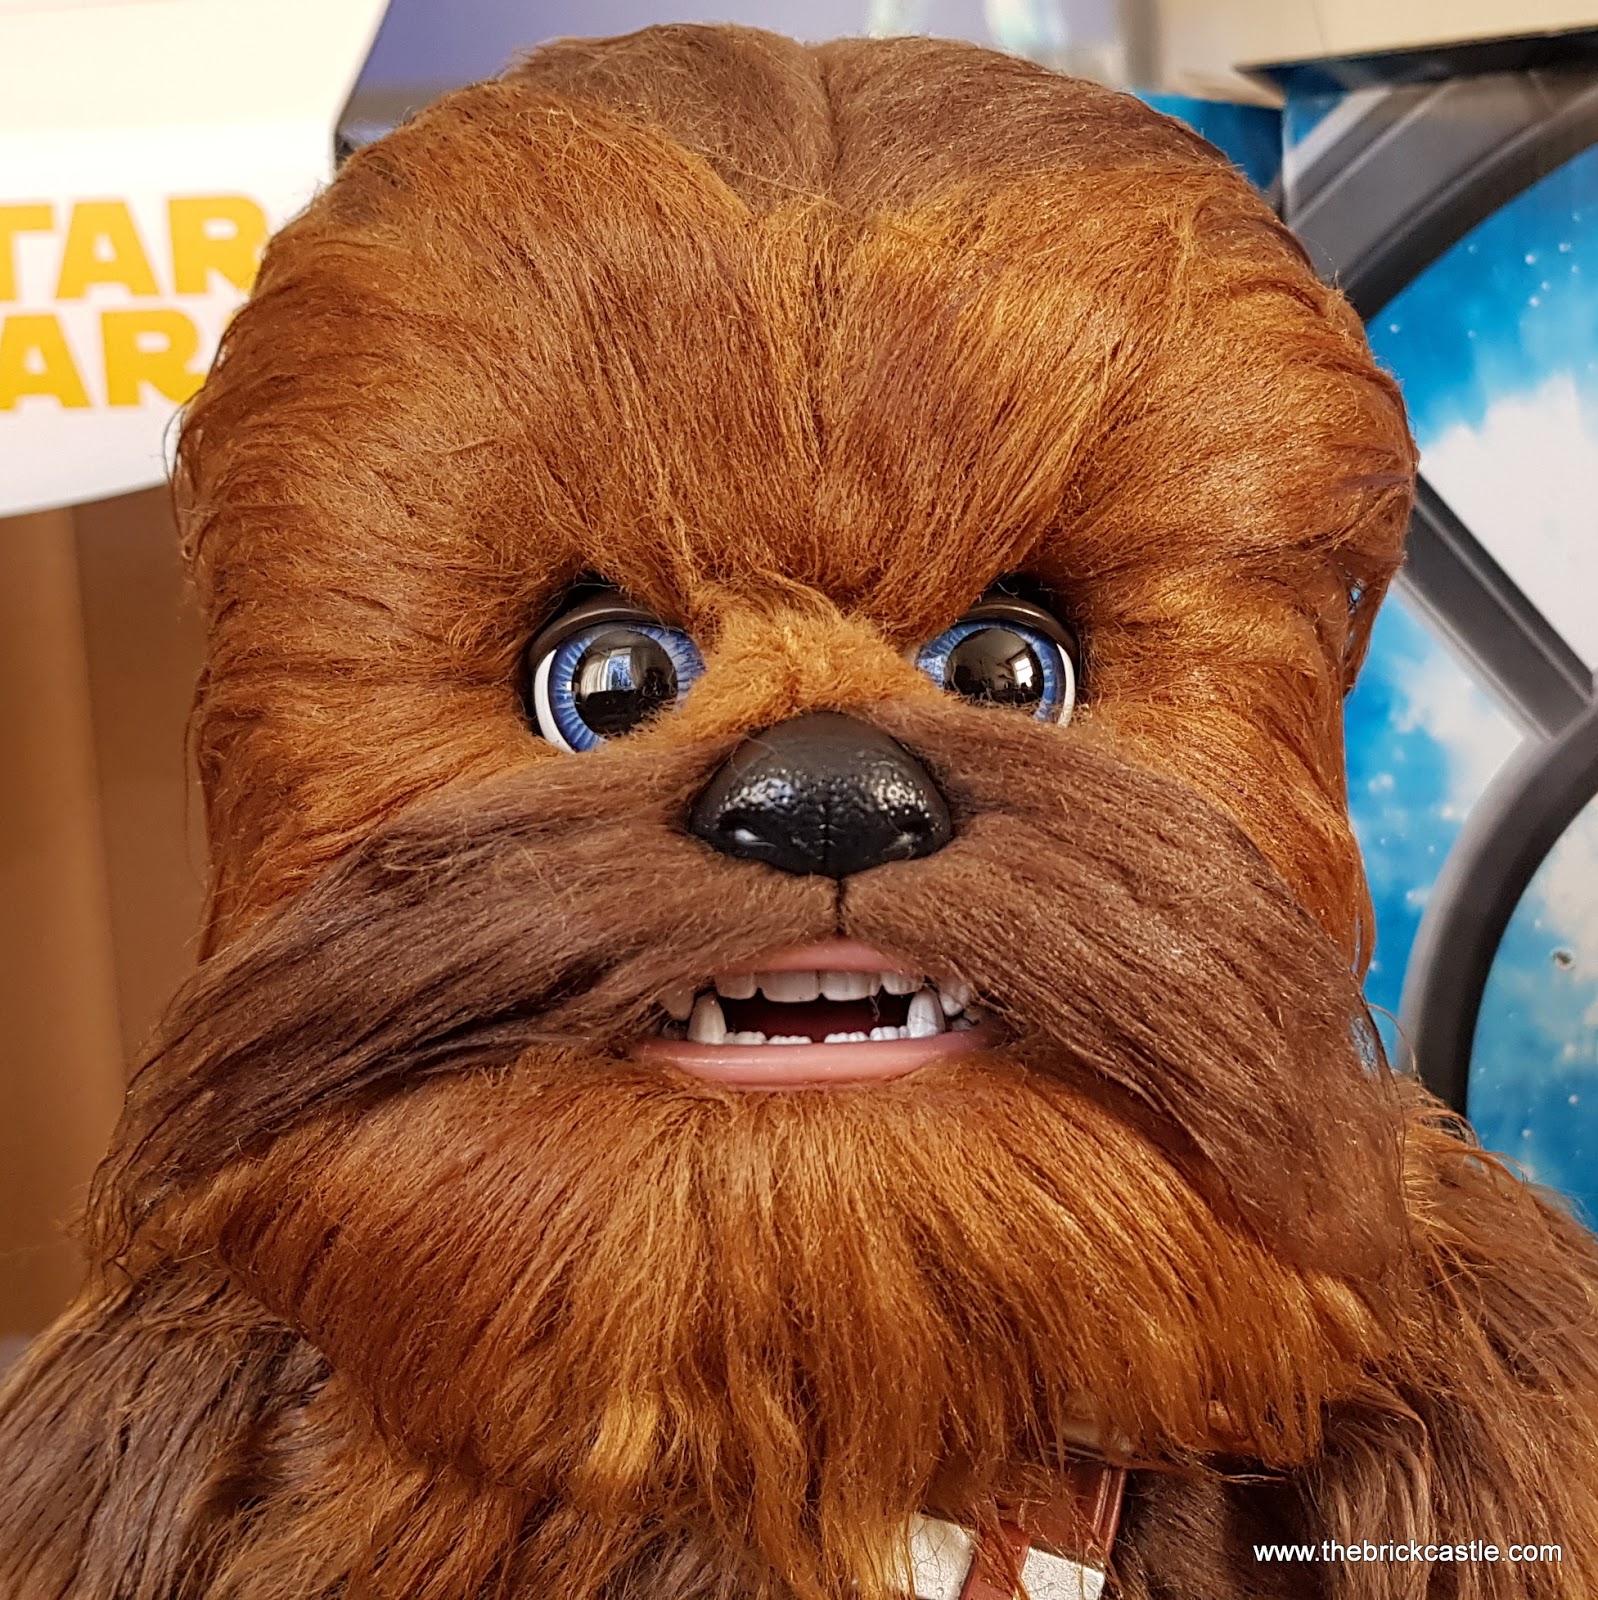 Star Wars Chewbacca Ultimate Co-pilot Chewie Plush Toy Wookiee Furreal Hasbro 